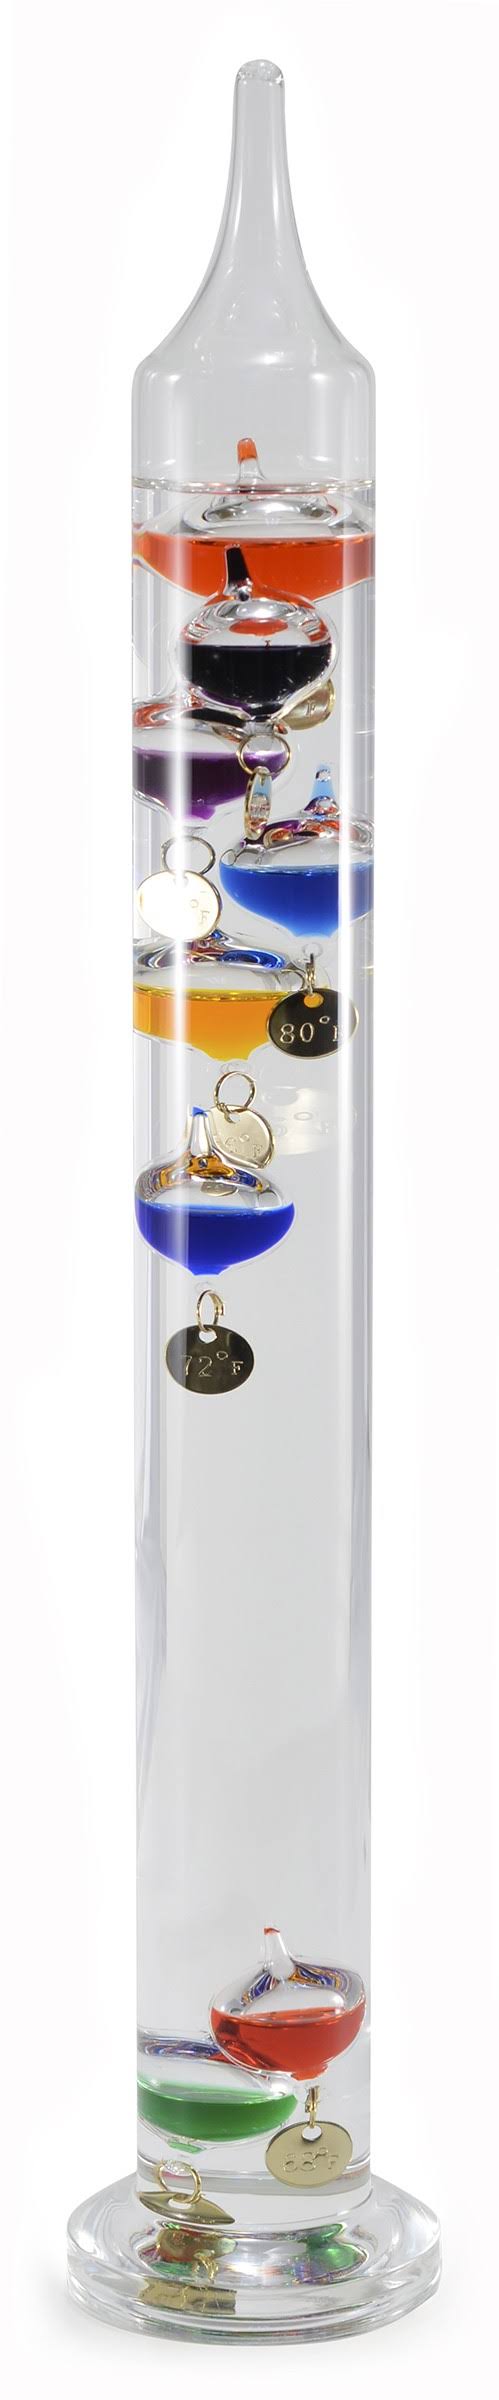 Koch Galileo 10700 Glass Thermometer 